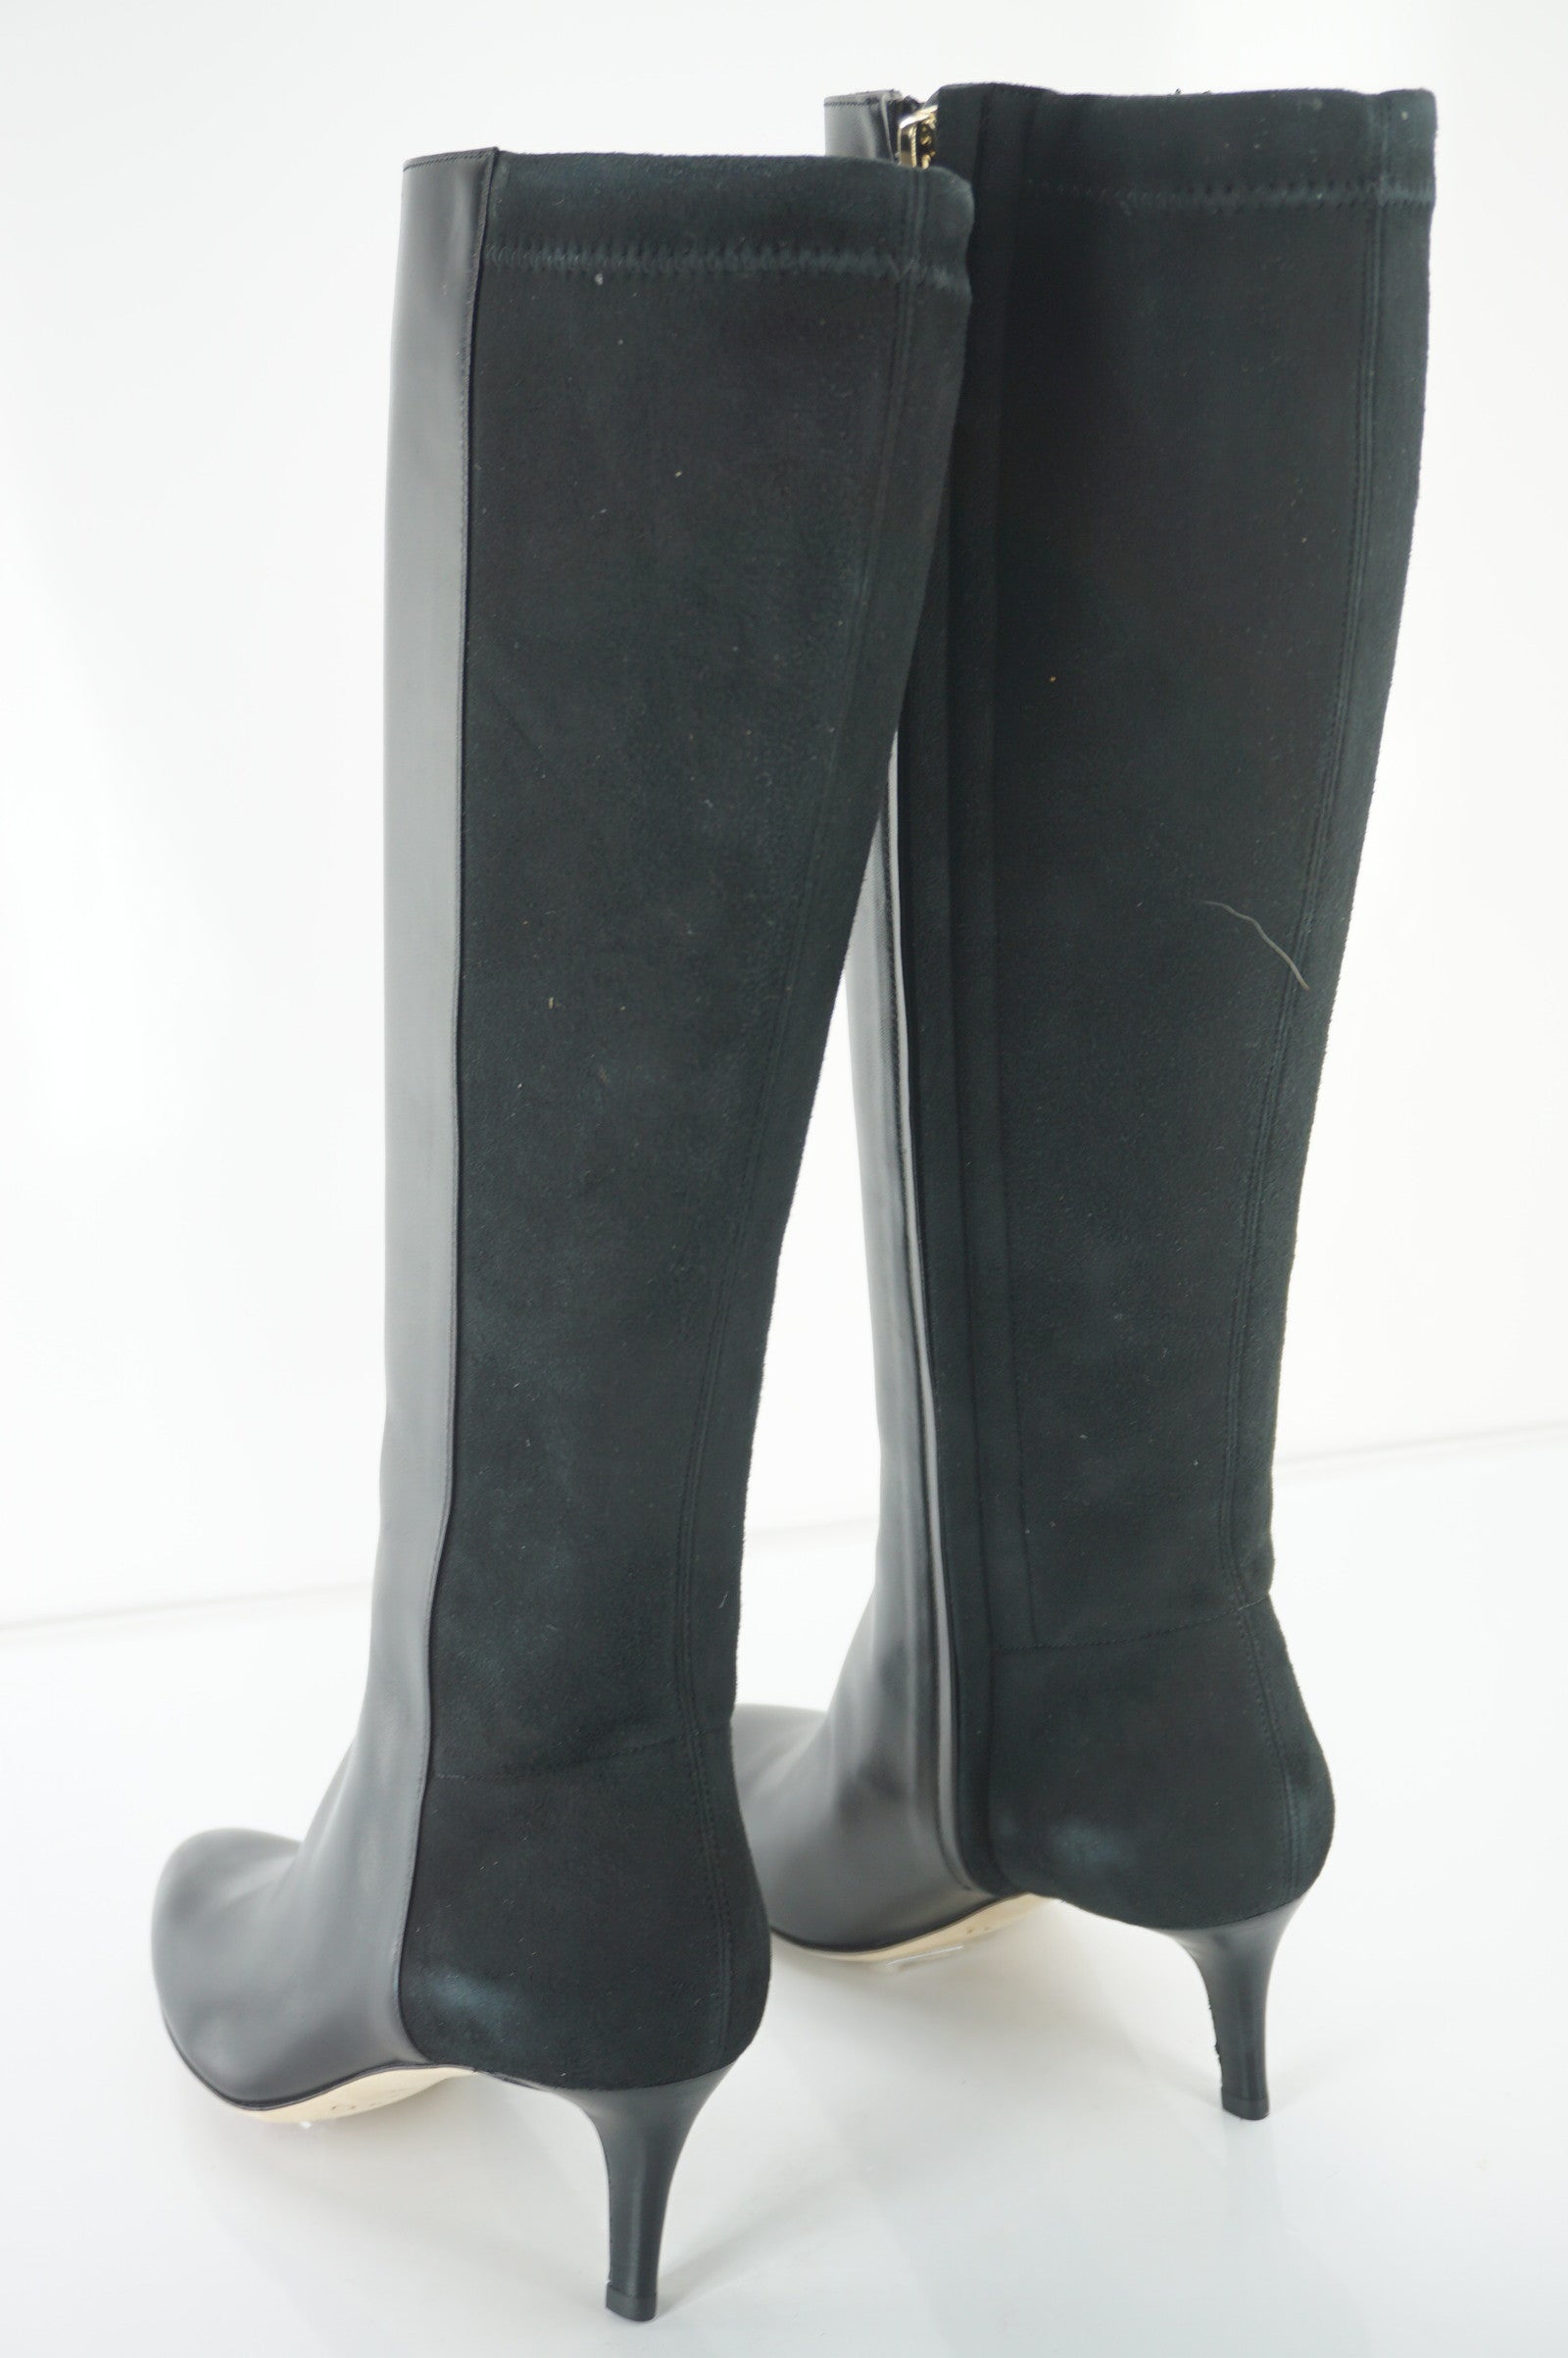 Jimmy Choo Aiden Tall Mixed Leather High Heel Riding Boots SZ 35 Knee NIB $1150